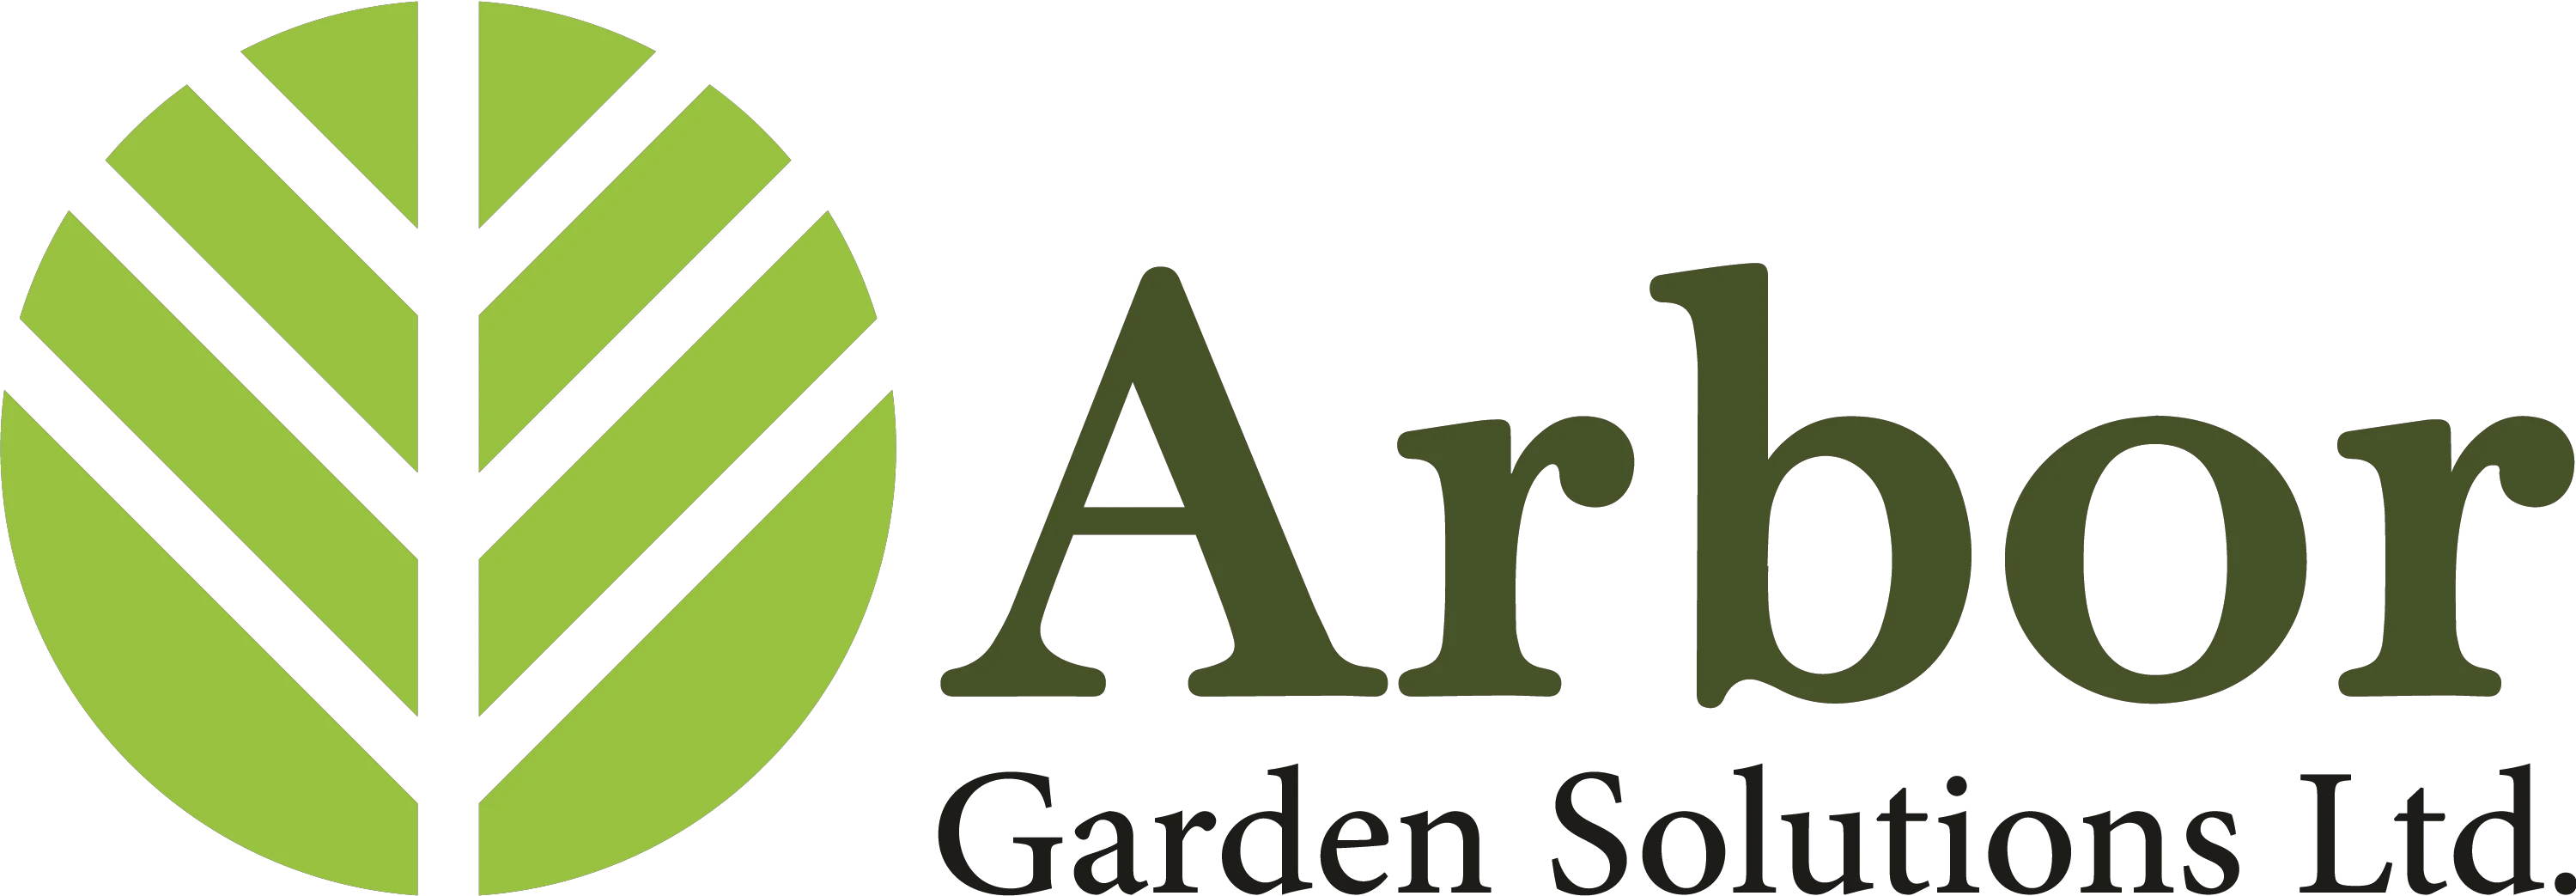 Arbor Garden Solutions Купоны 